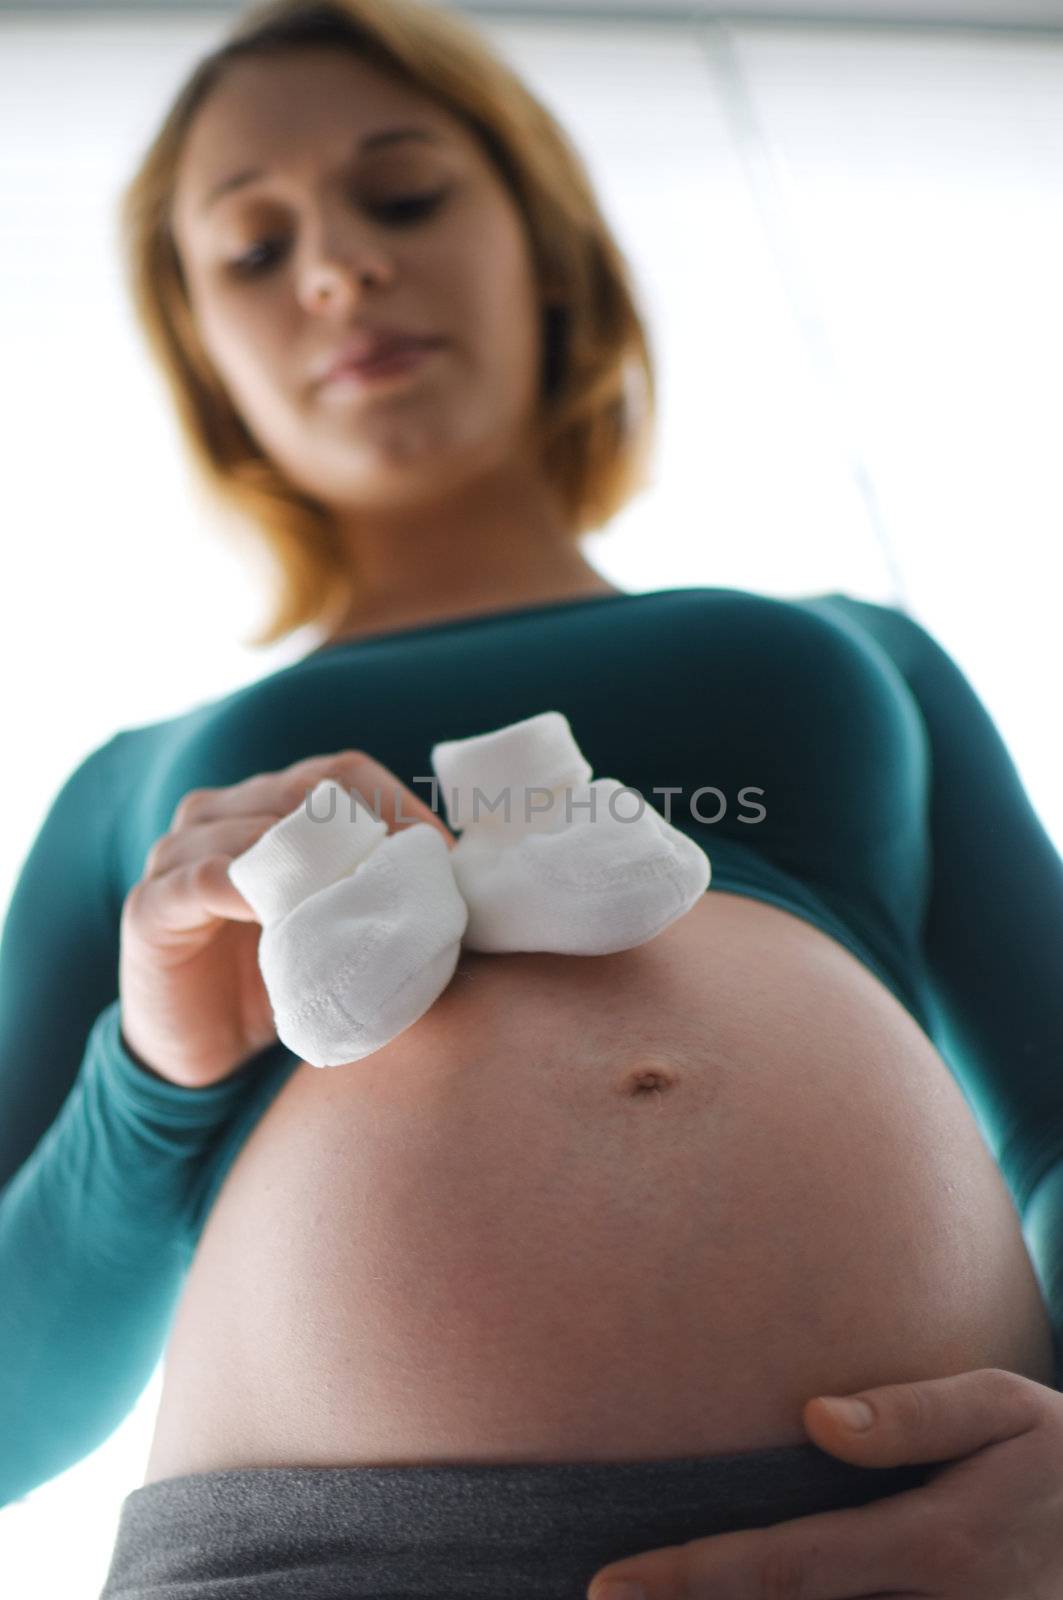 Pregnant woman by fahrner